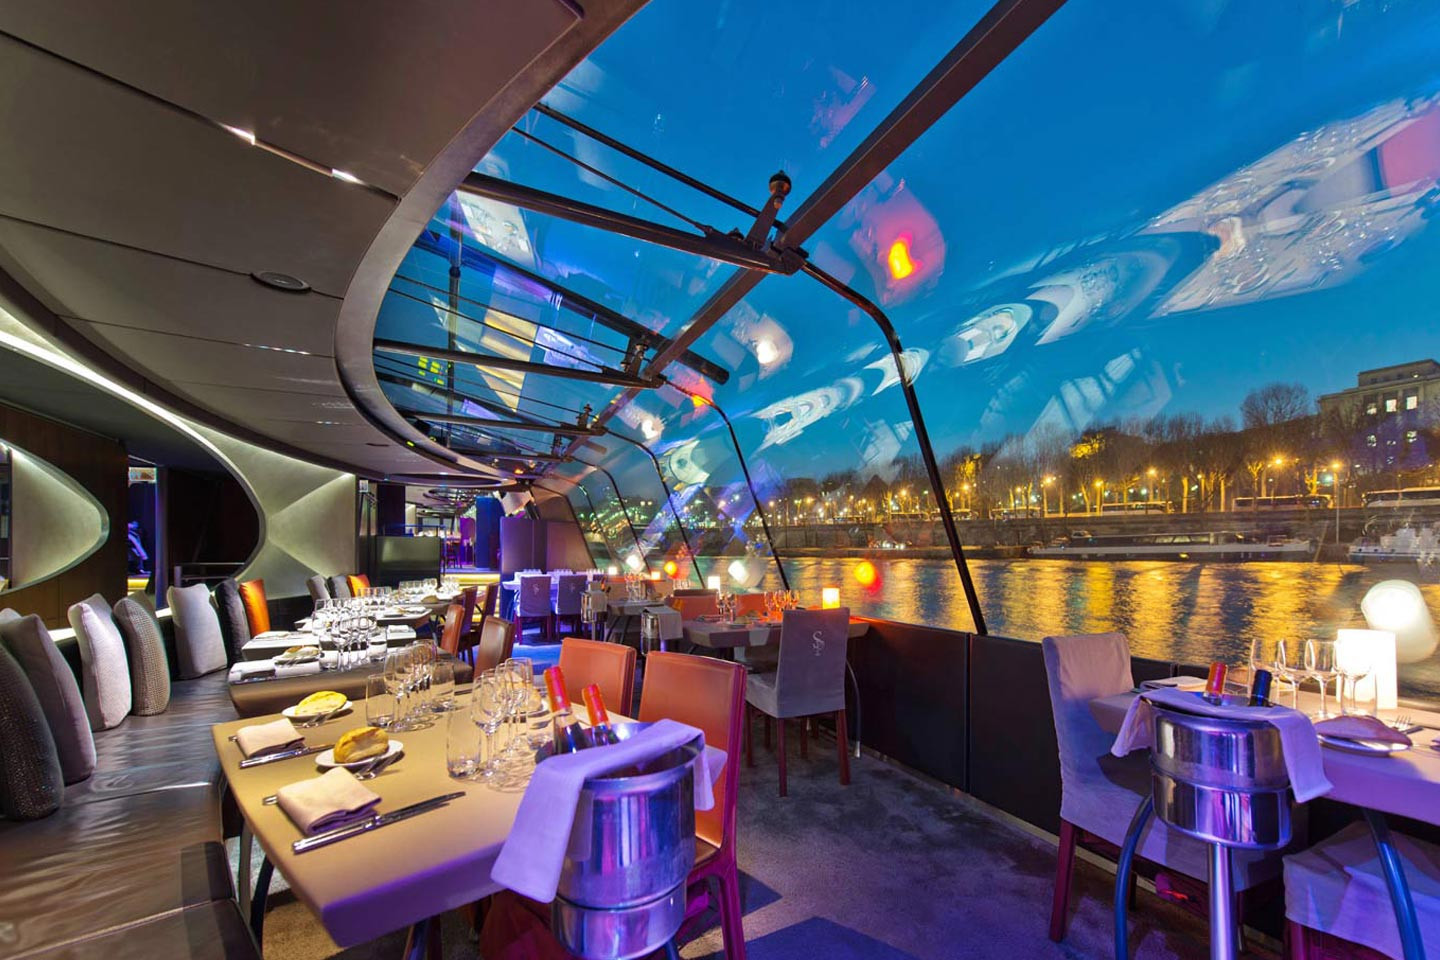 Bateaux Parisiens Seine River Dinner Cruise
 Seine River Cruise Bateaux Parisiens